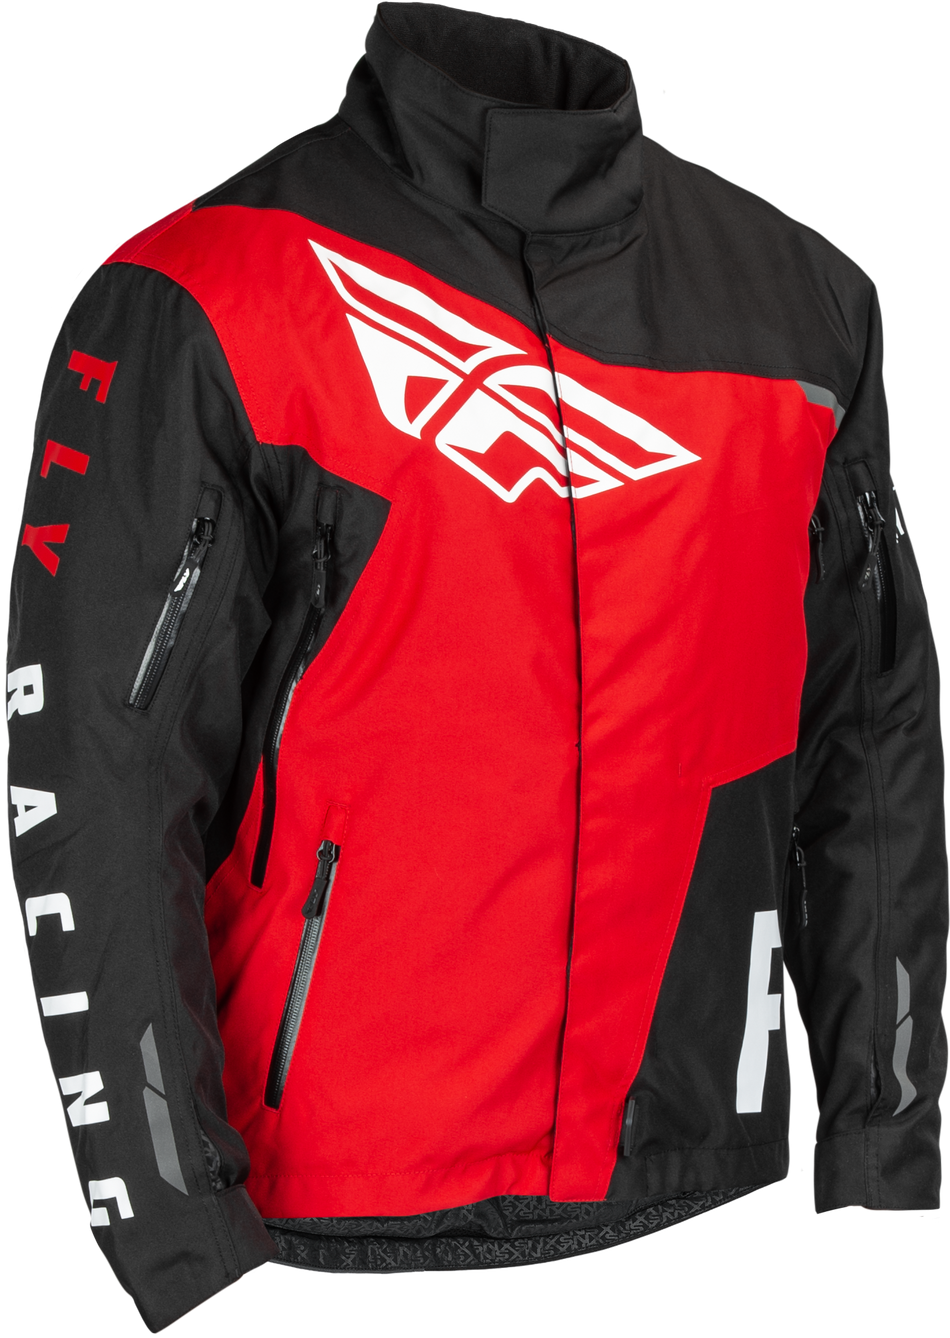 FLY RACING Snx Pro Jacket Black/Red 4x 470-54024X